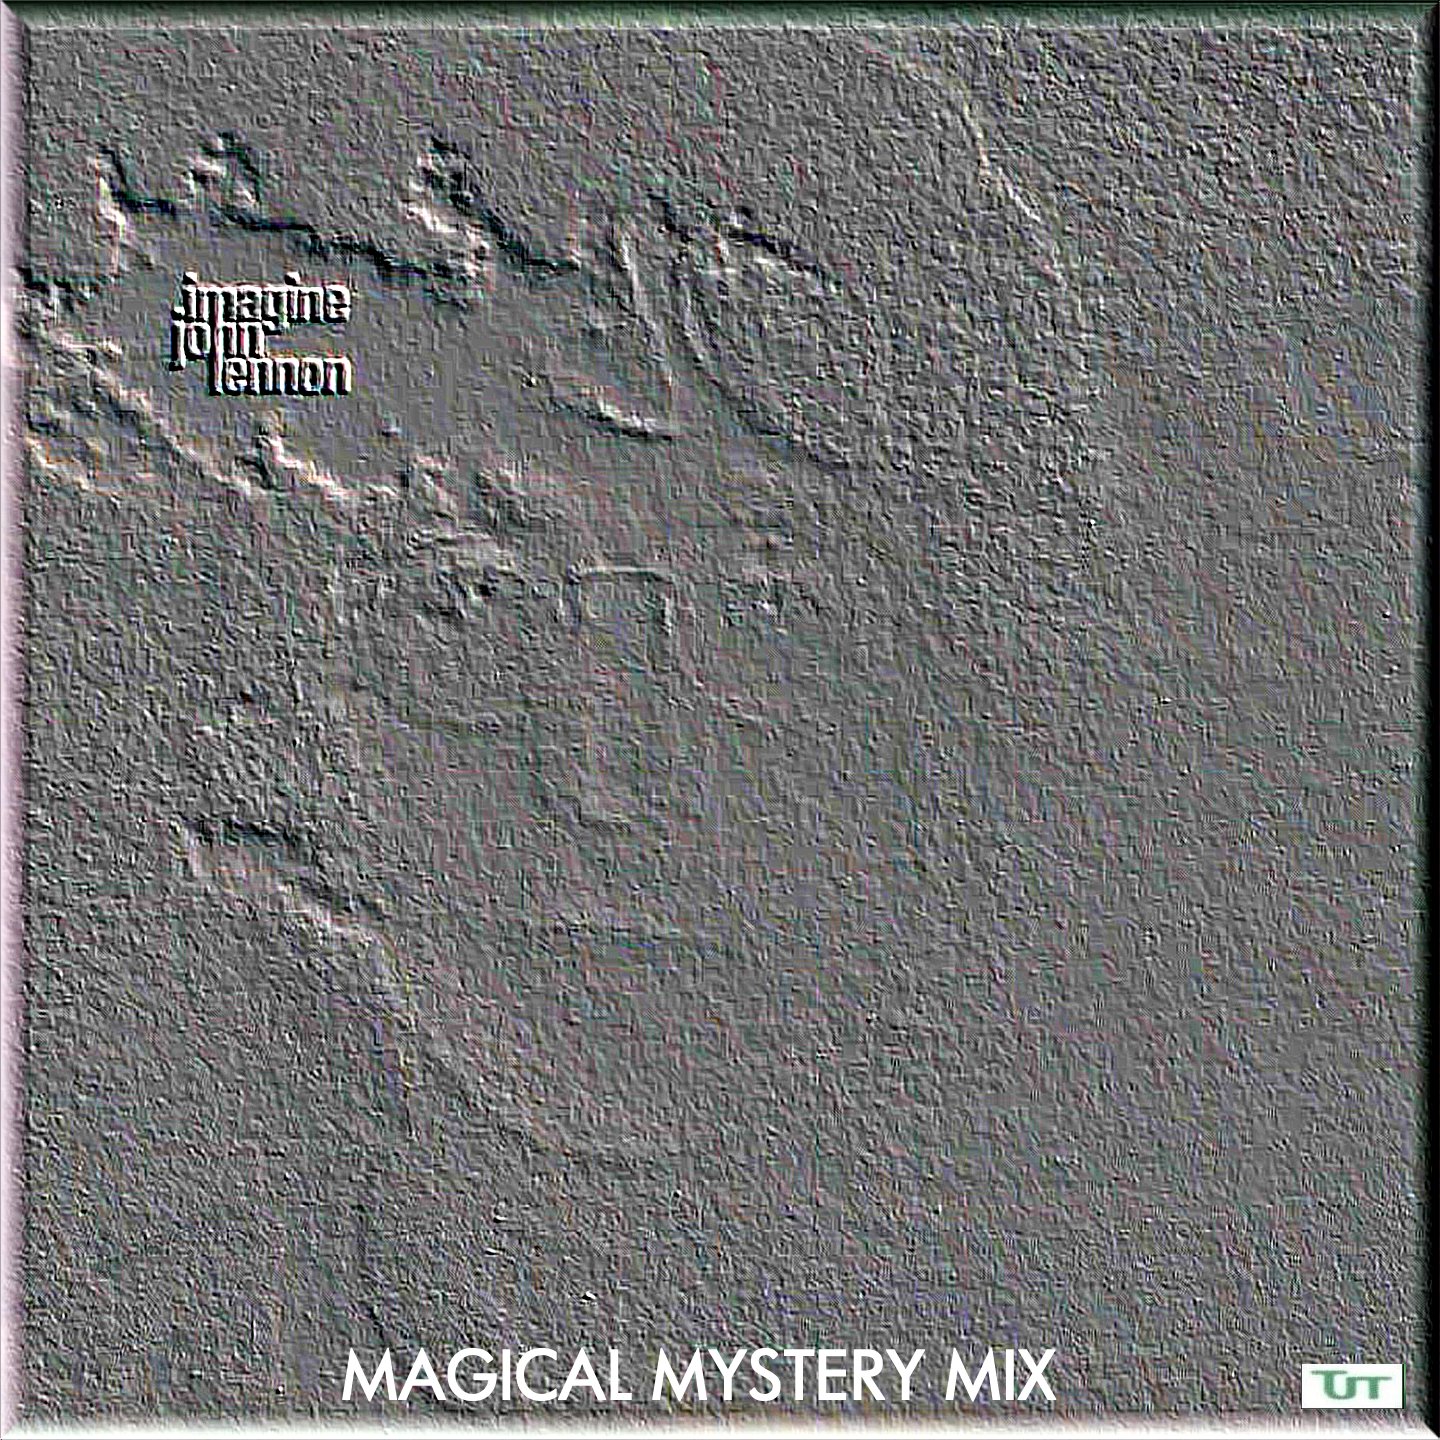 ajImagine Magical Mystery Mix TJT 141 Front.jpg